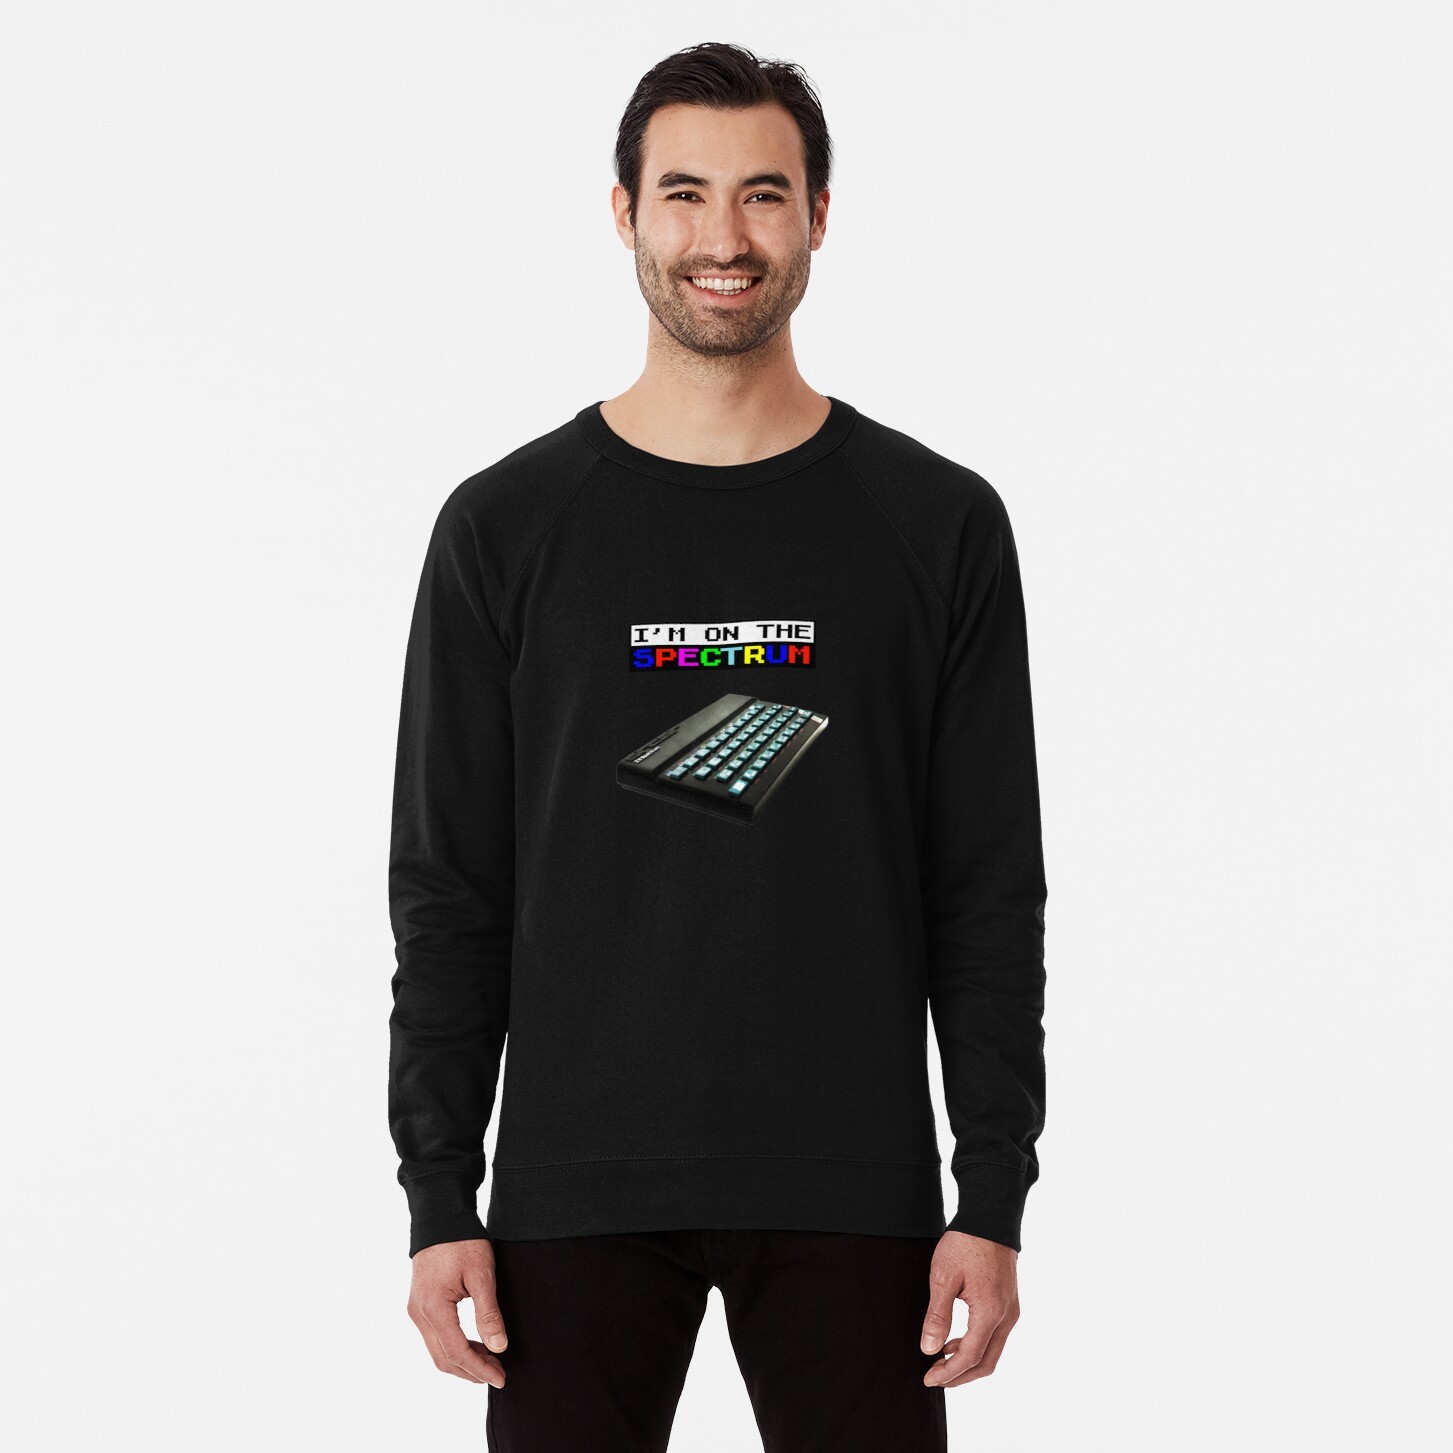 I'm on the Spectrum! - Lightweight Sweatshirt by NTK Apparel